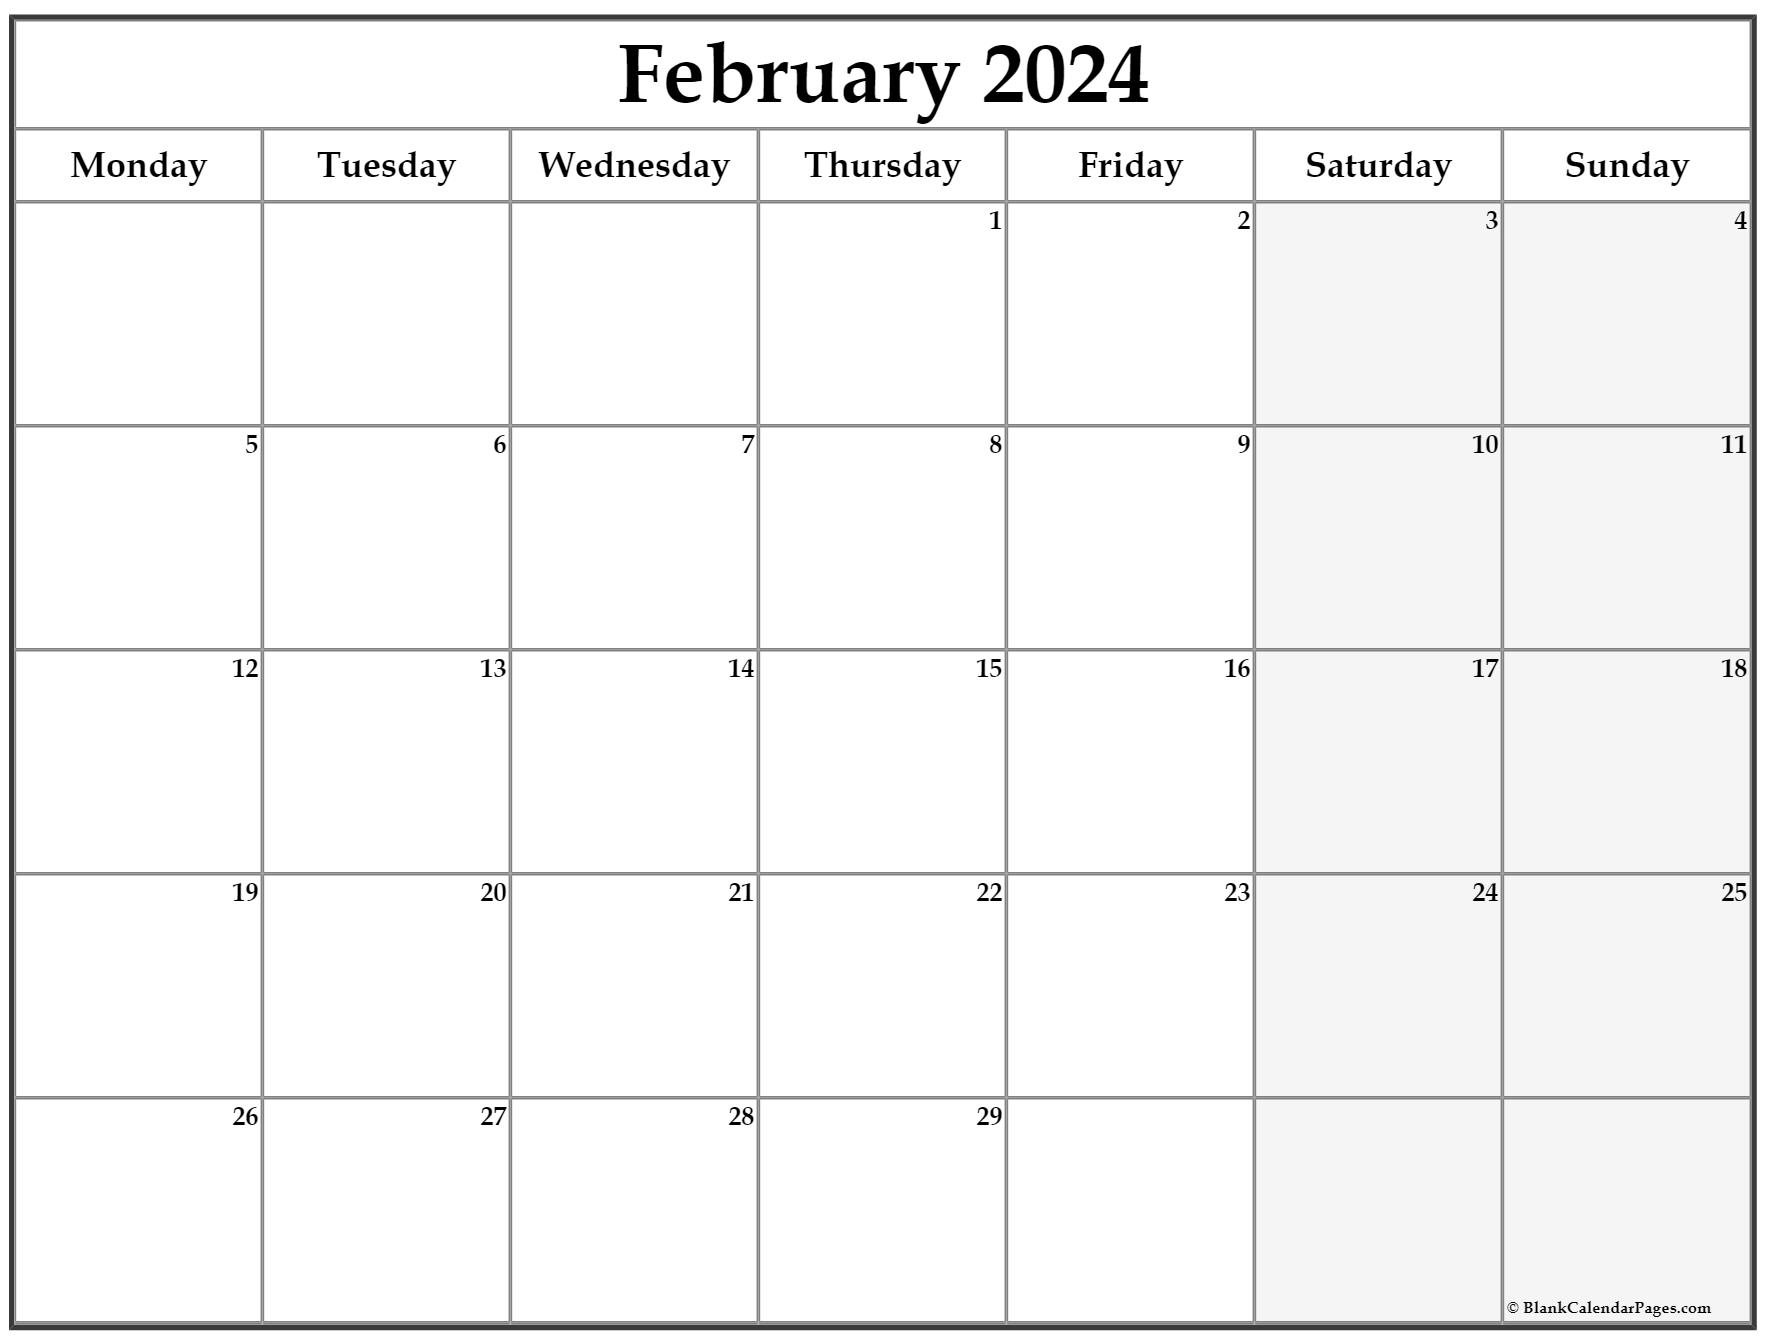 February 2021 Monday Calendar | Monday to Sunday